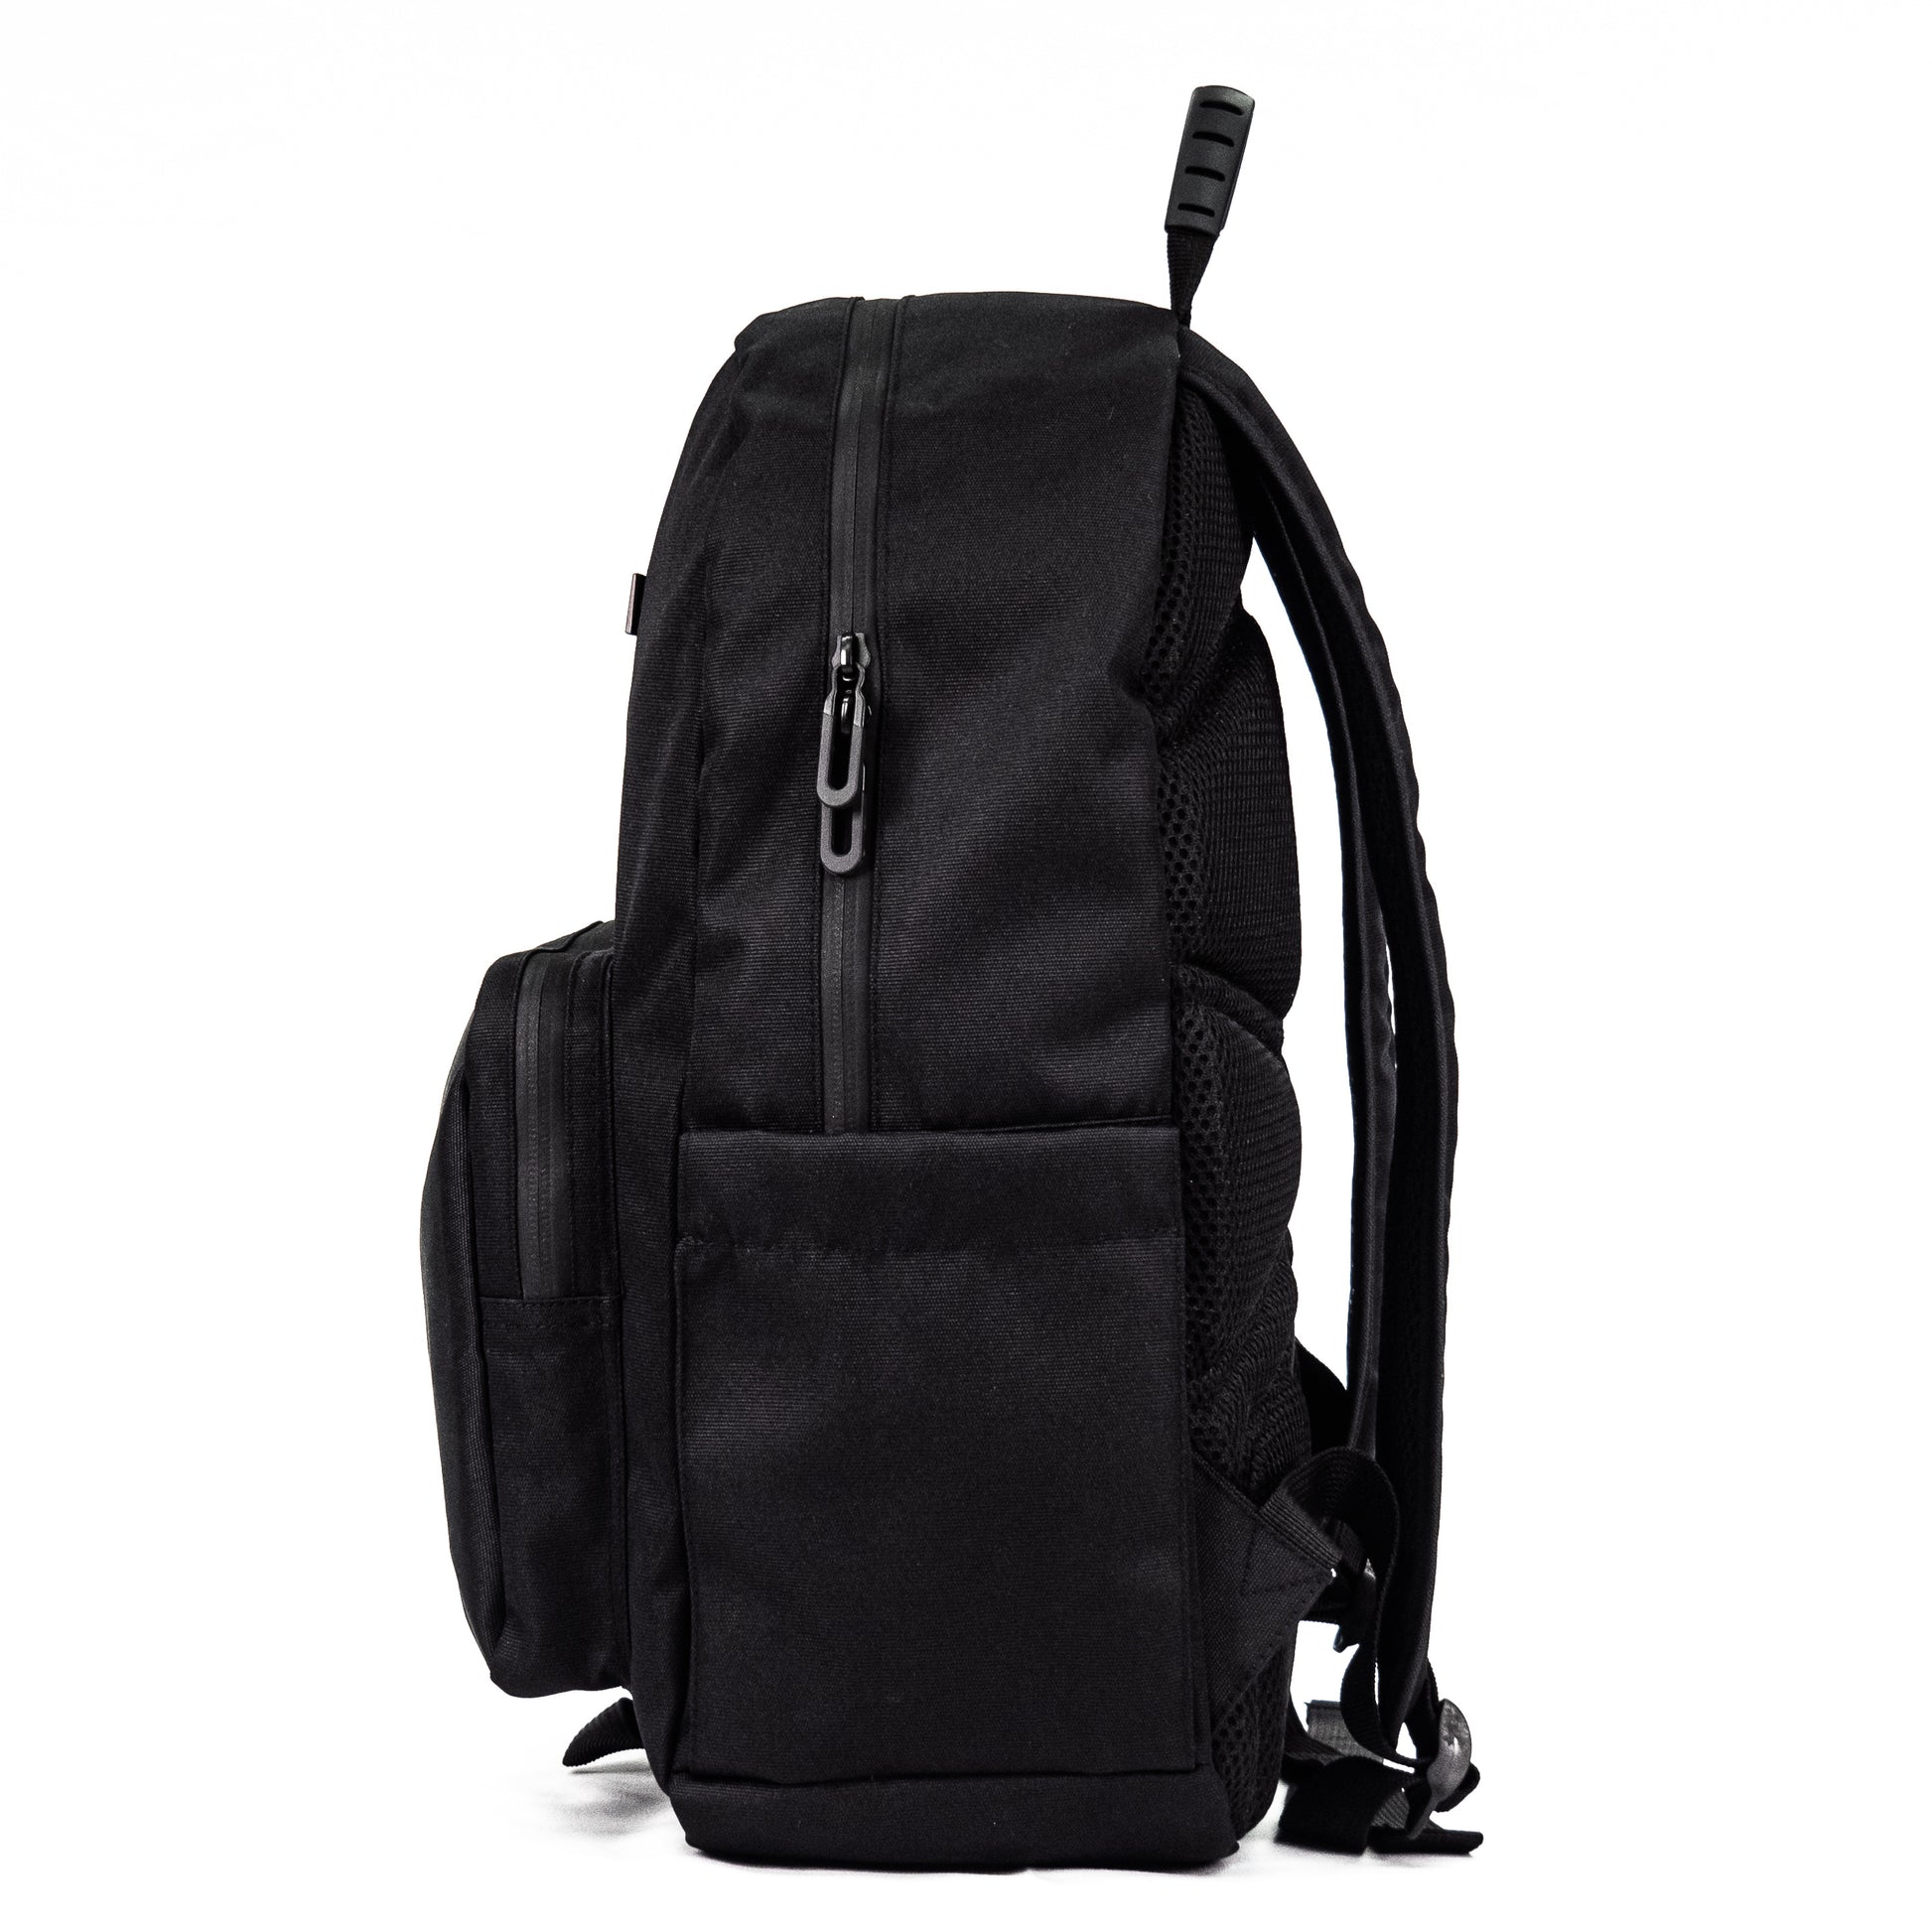 black backpack with front pocket and water bottle pocket